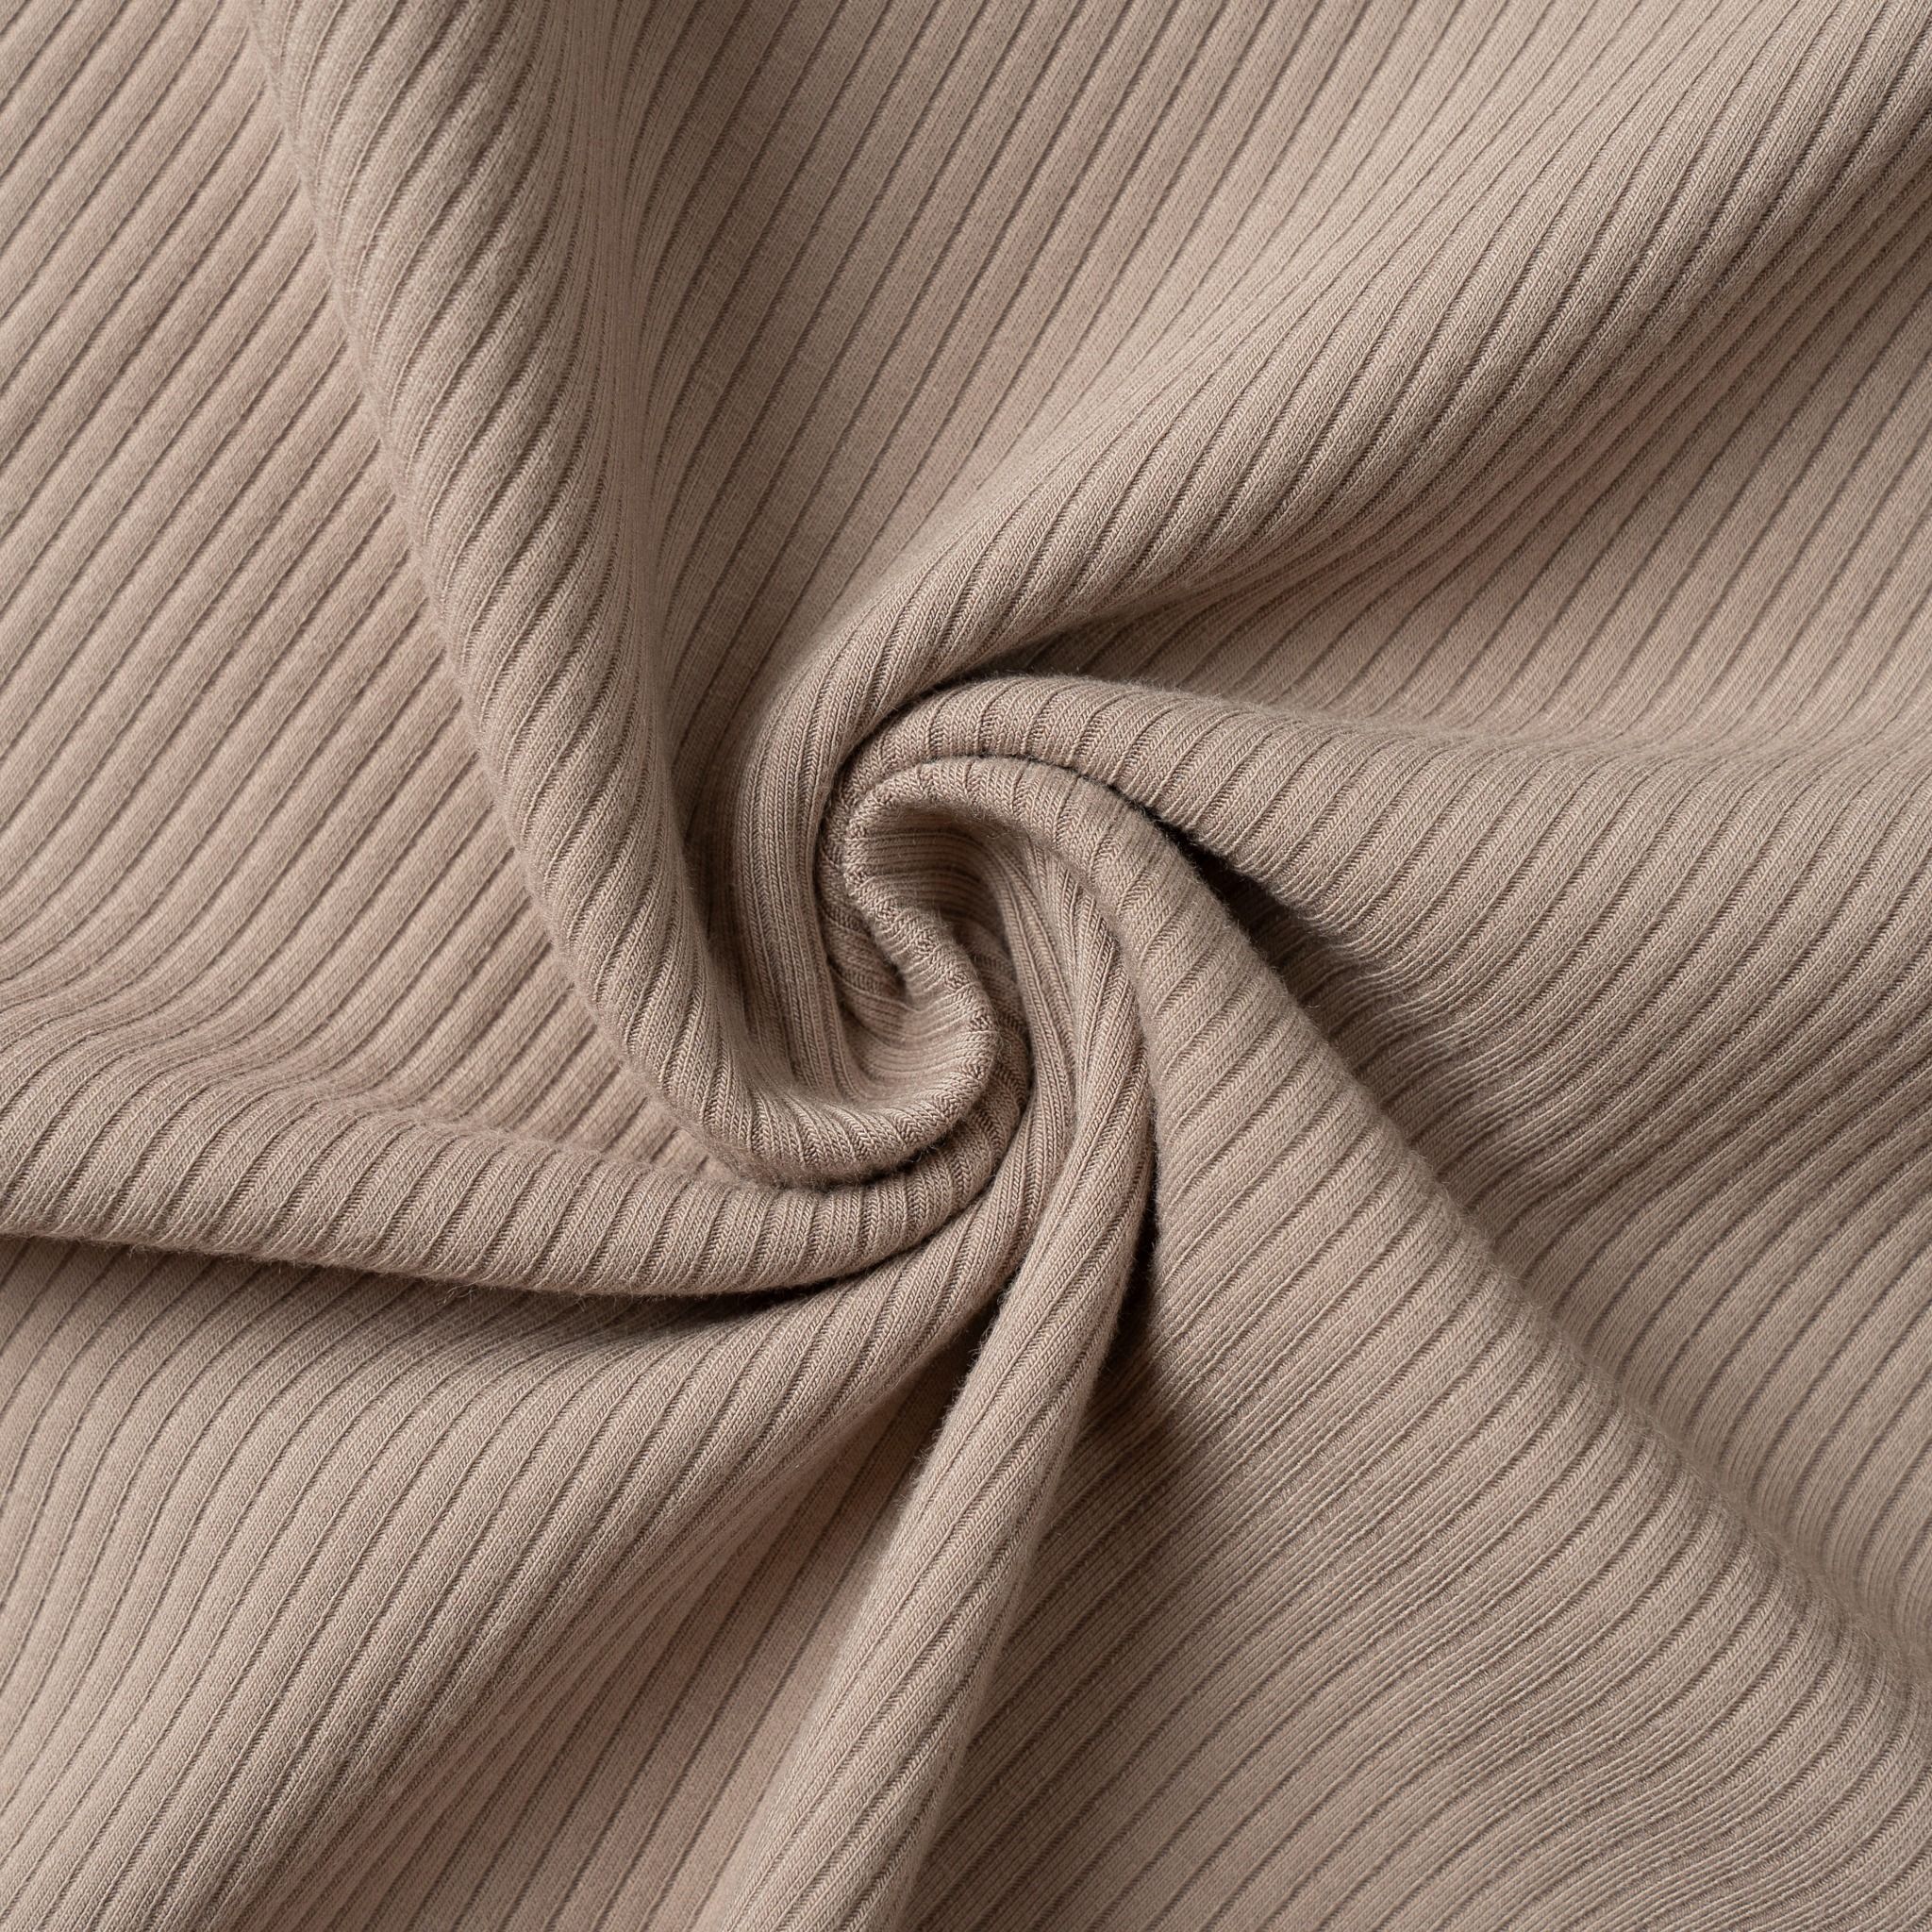  ÁO THUN CỔ TRÒN WEDER  vải Cotton thun gân mềm mịn 